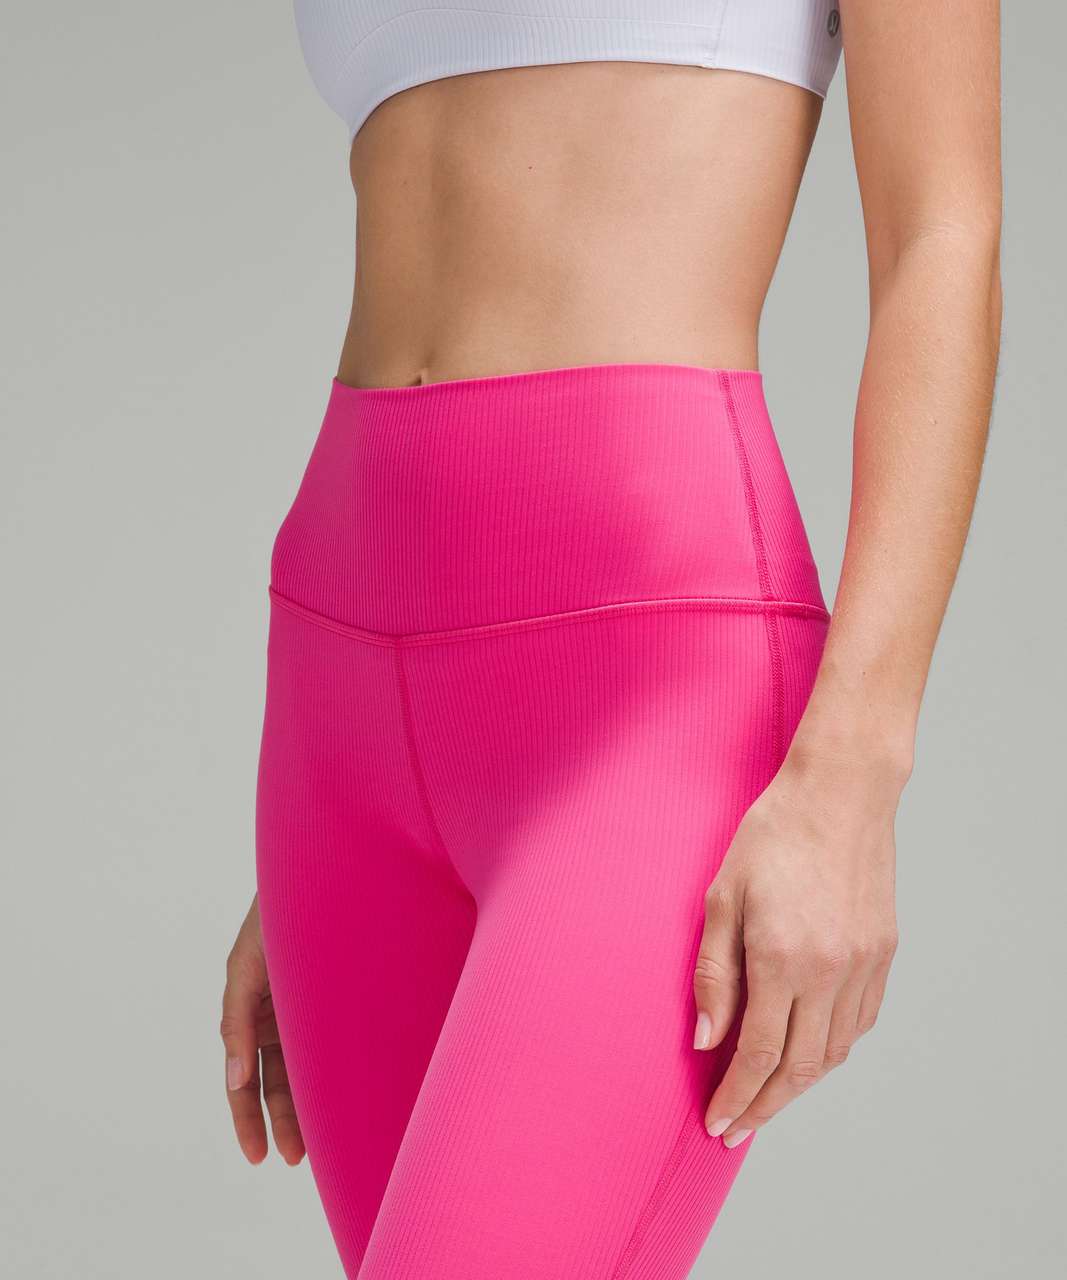 Lululemon Align 25” Leggings Pink Size 4 - $62 (38% Off Retail